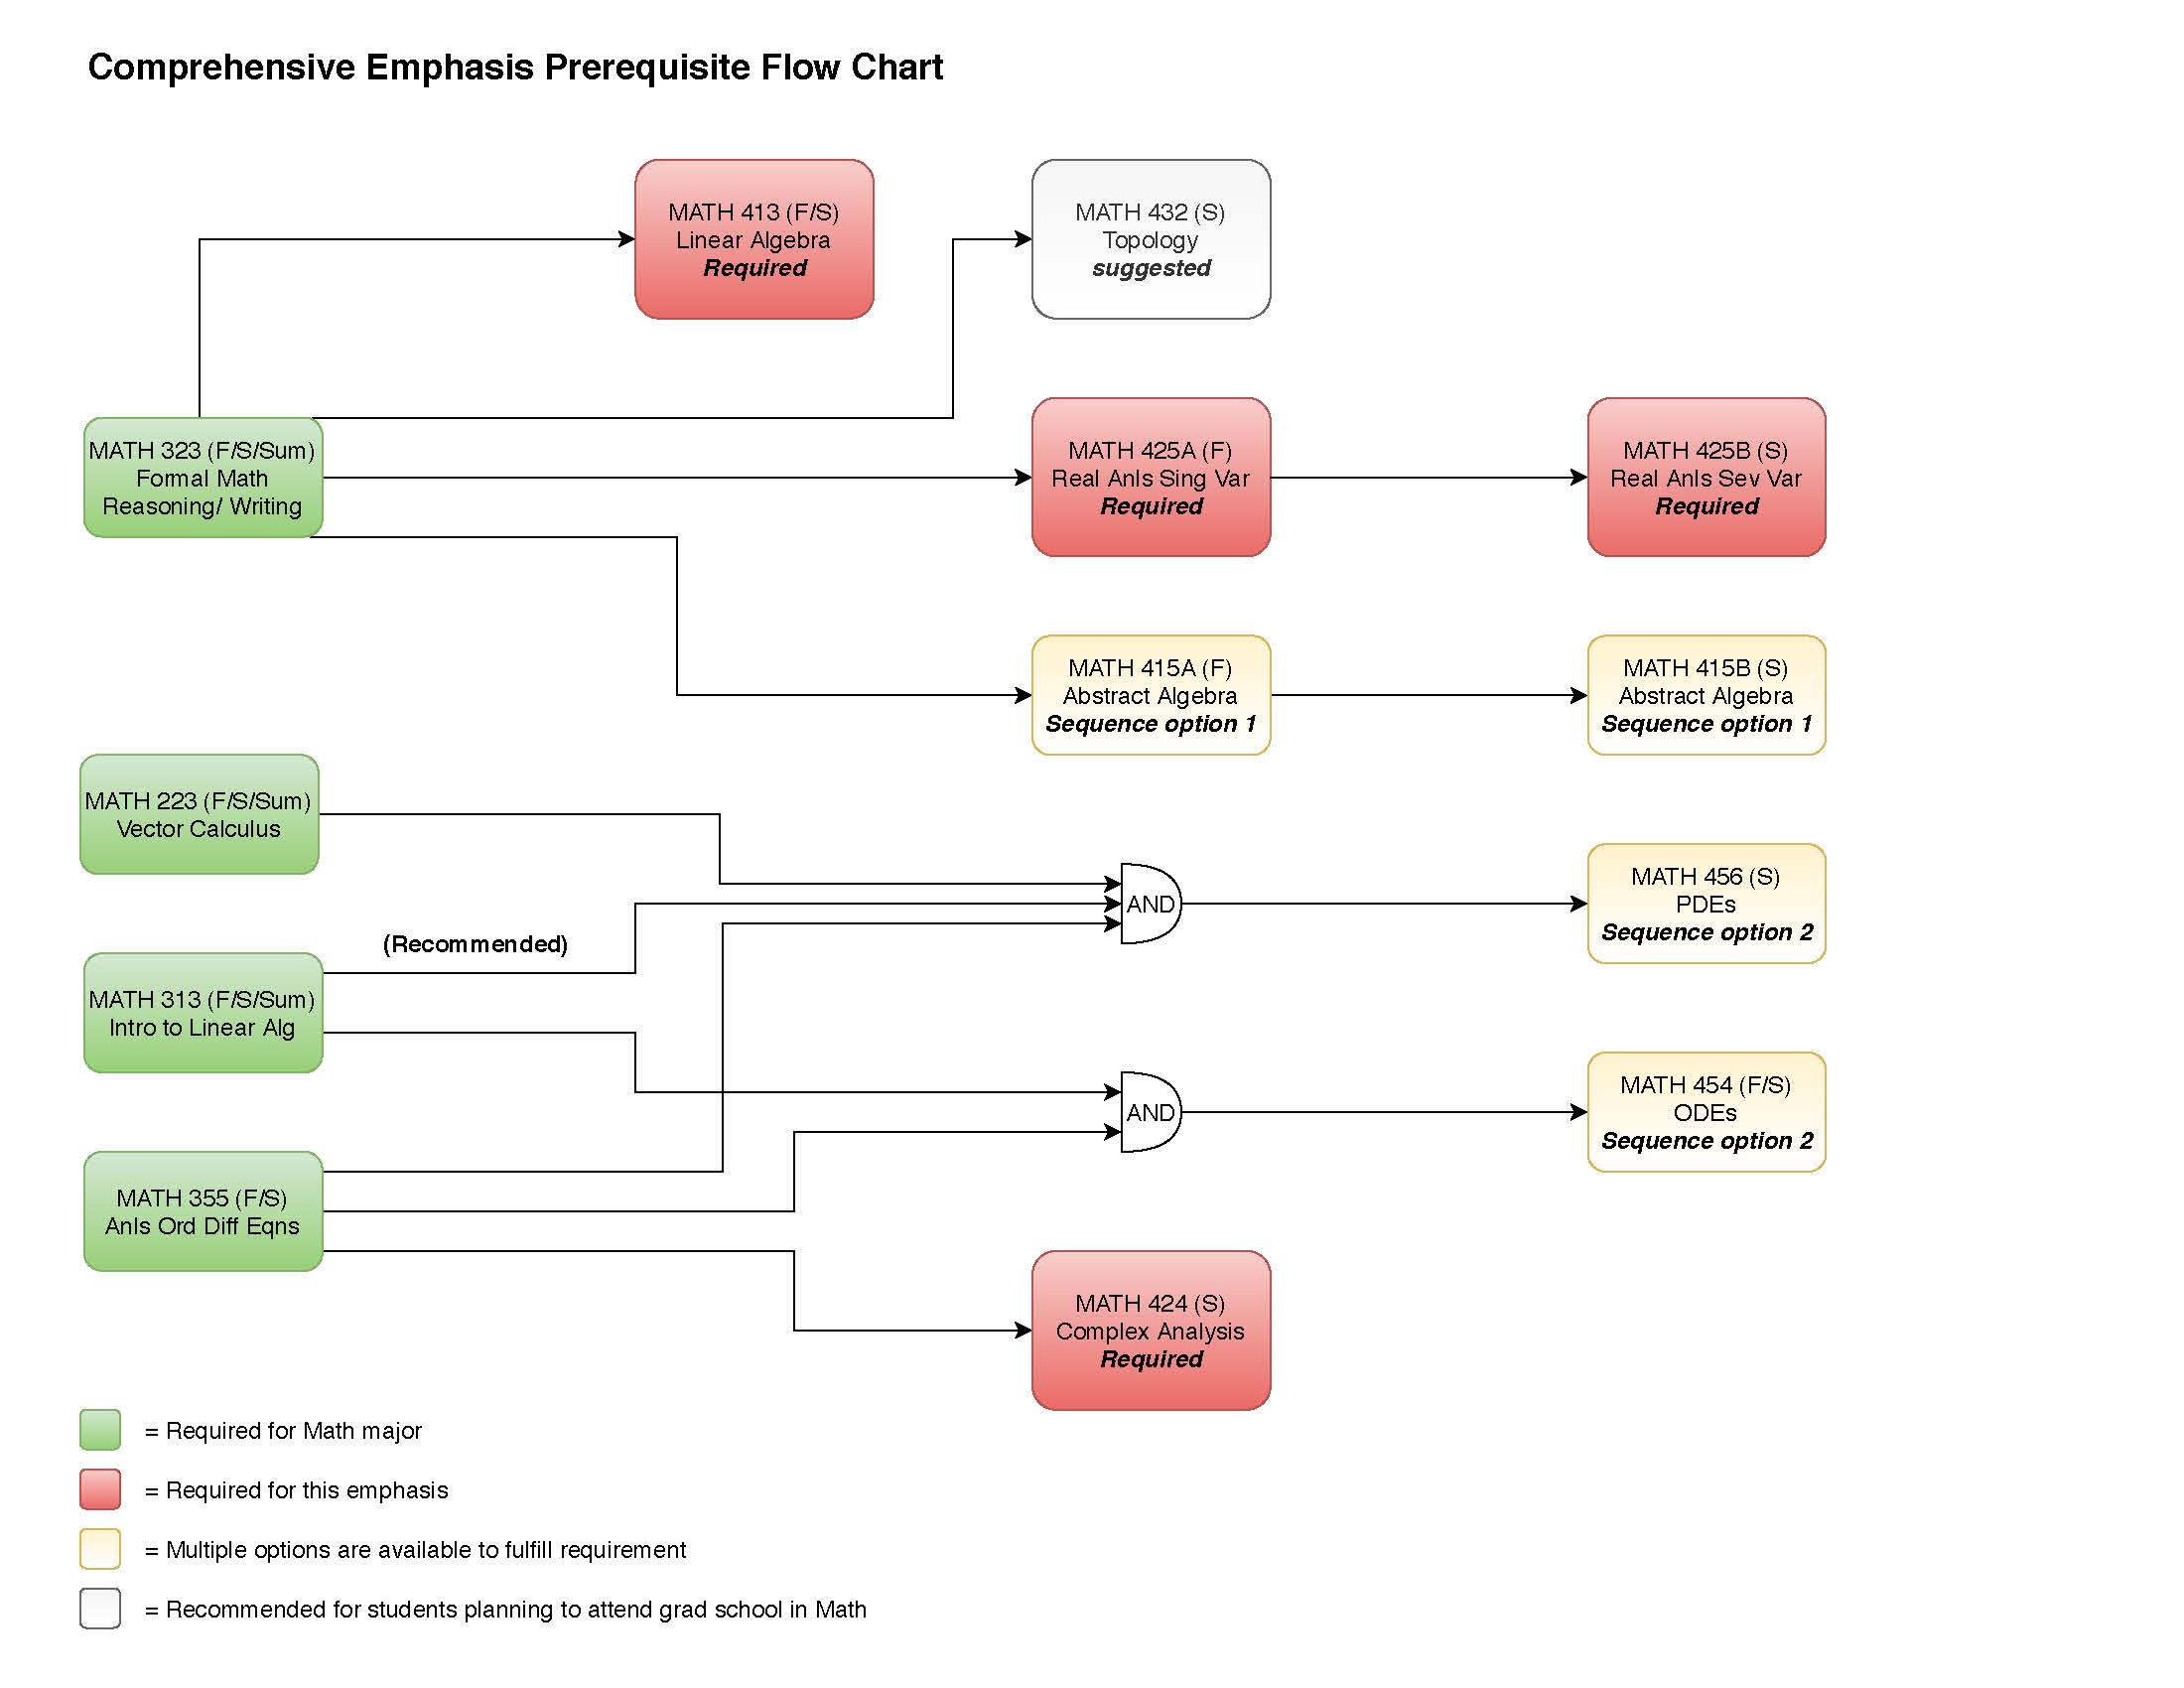 prerequisite flowchart for comprehensive emphasis (click image for downloadable PDF)